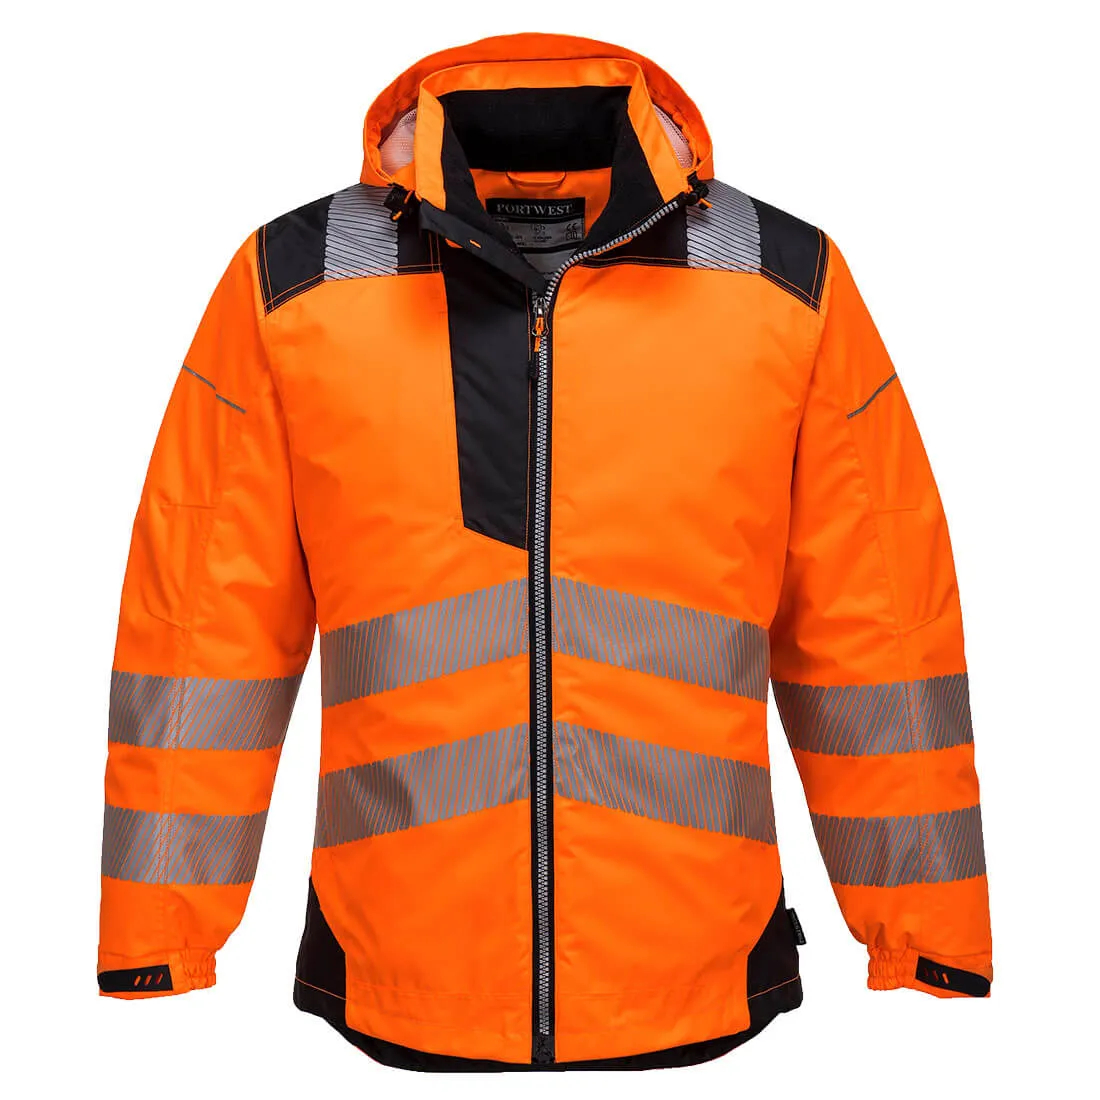 PW3 Hi Vis Winter Rain Jacket - Orange / Black, S